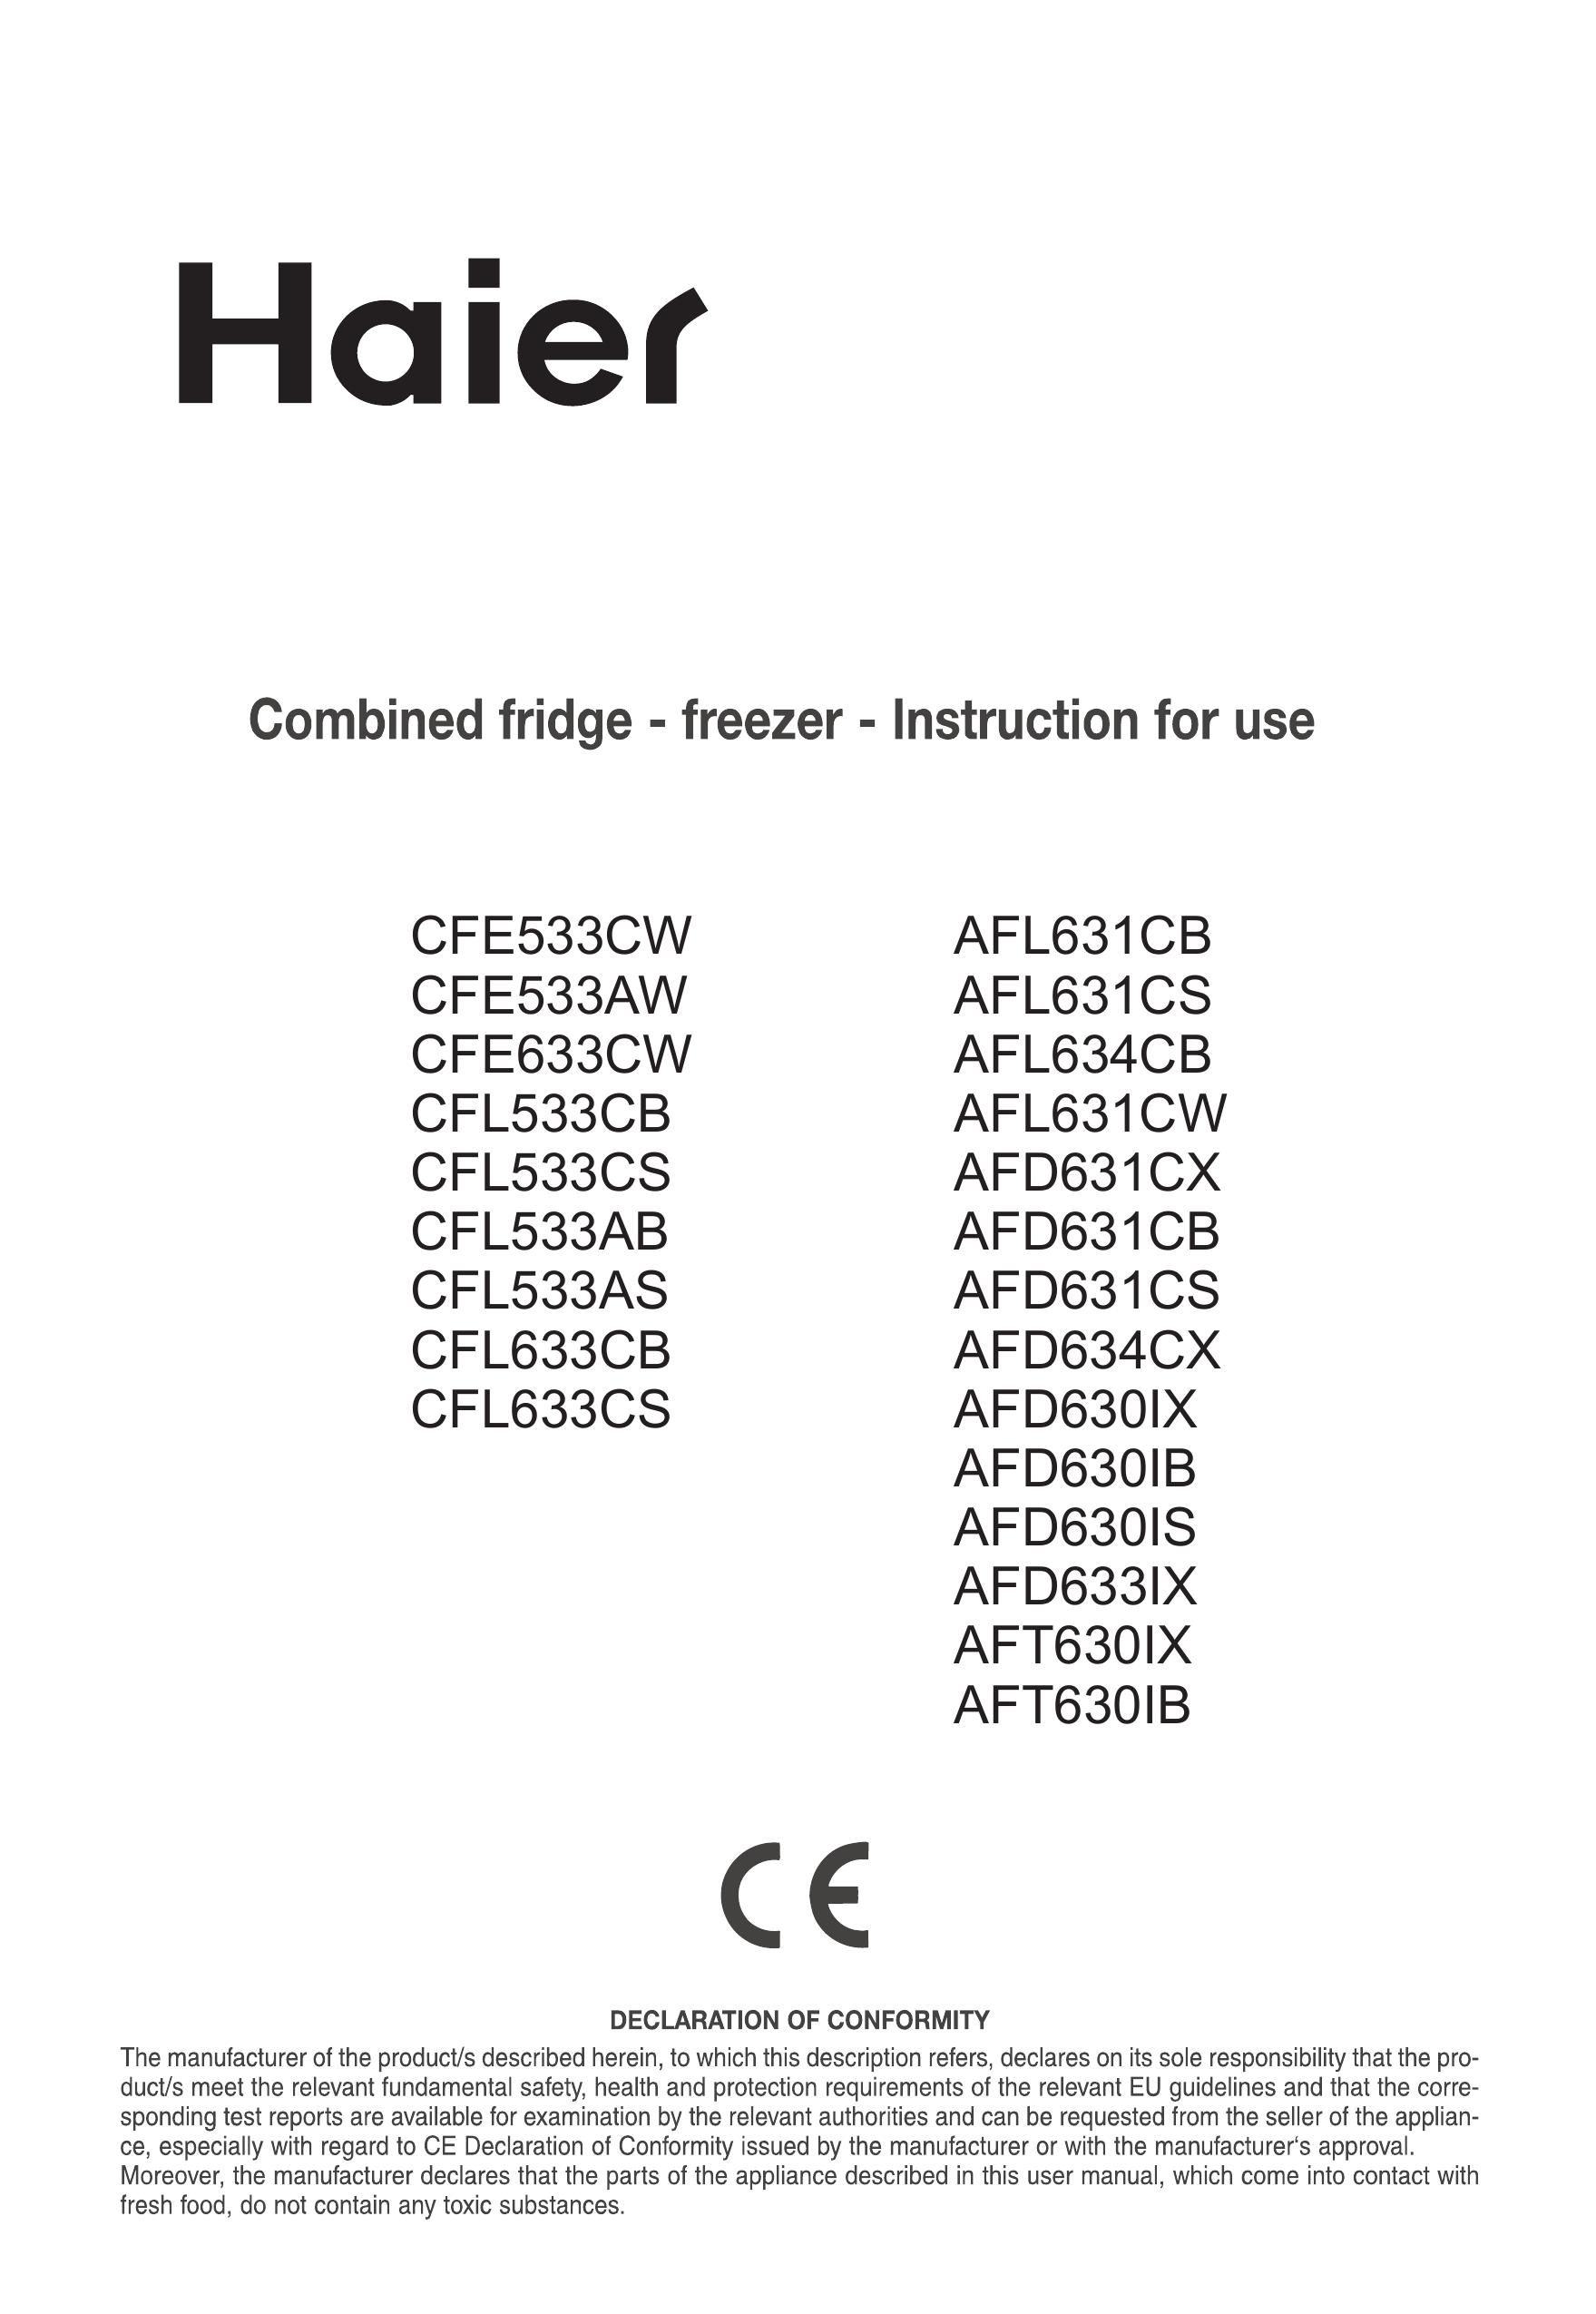 Haier AFT630IX Refrigerator User Manual